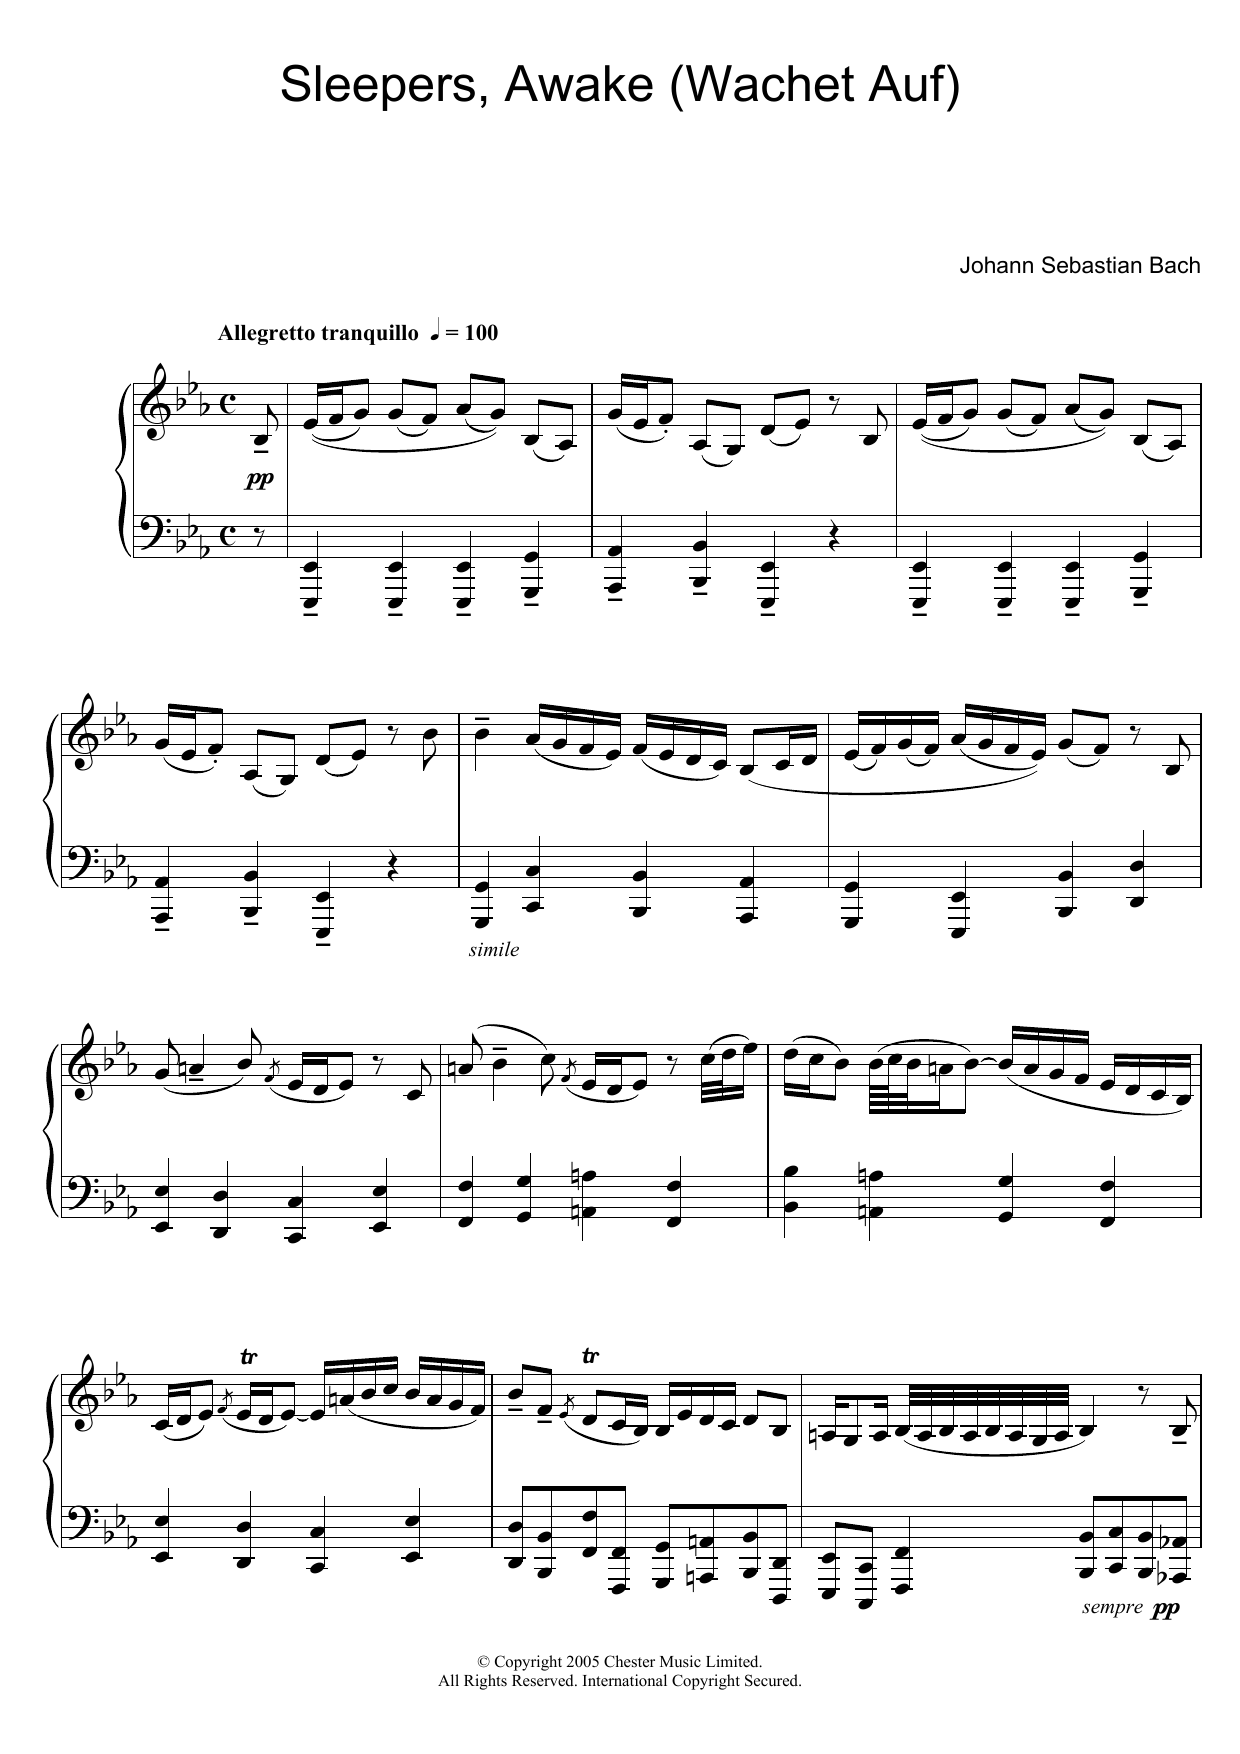 Johann Sebastian Bach Sleepers, Awake (Wachet Auf) Sheet Music Notes & Chords for Clarinet - Download or Print PDF